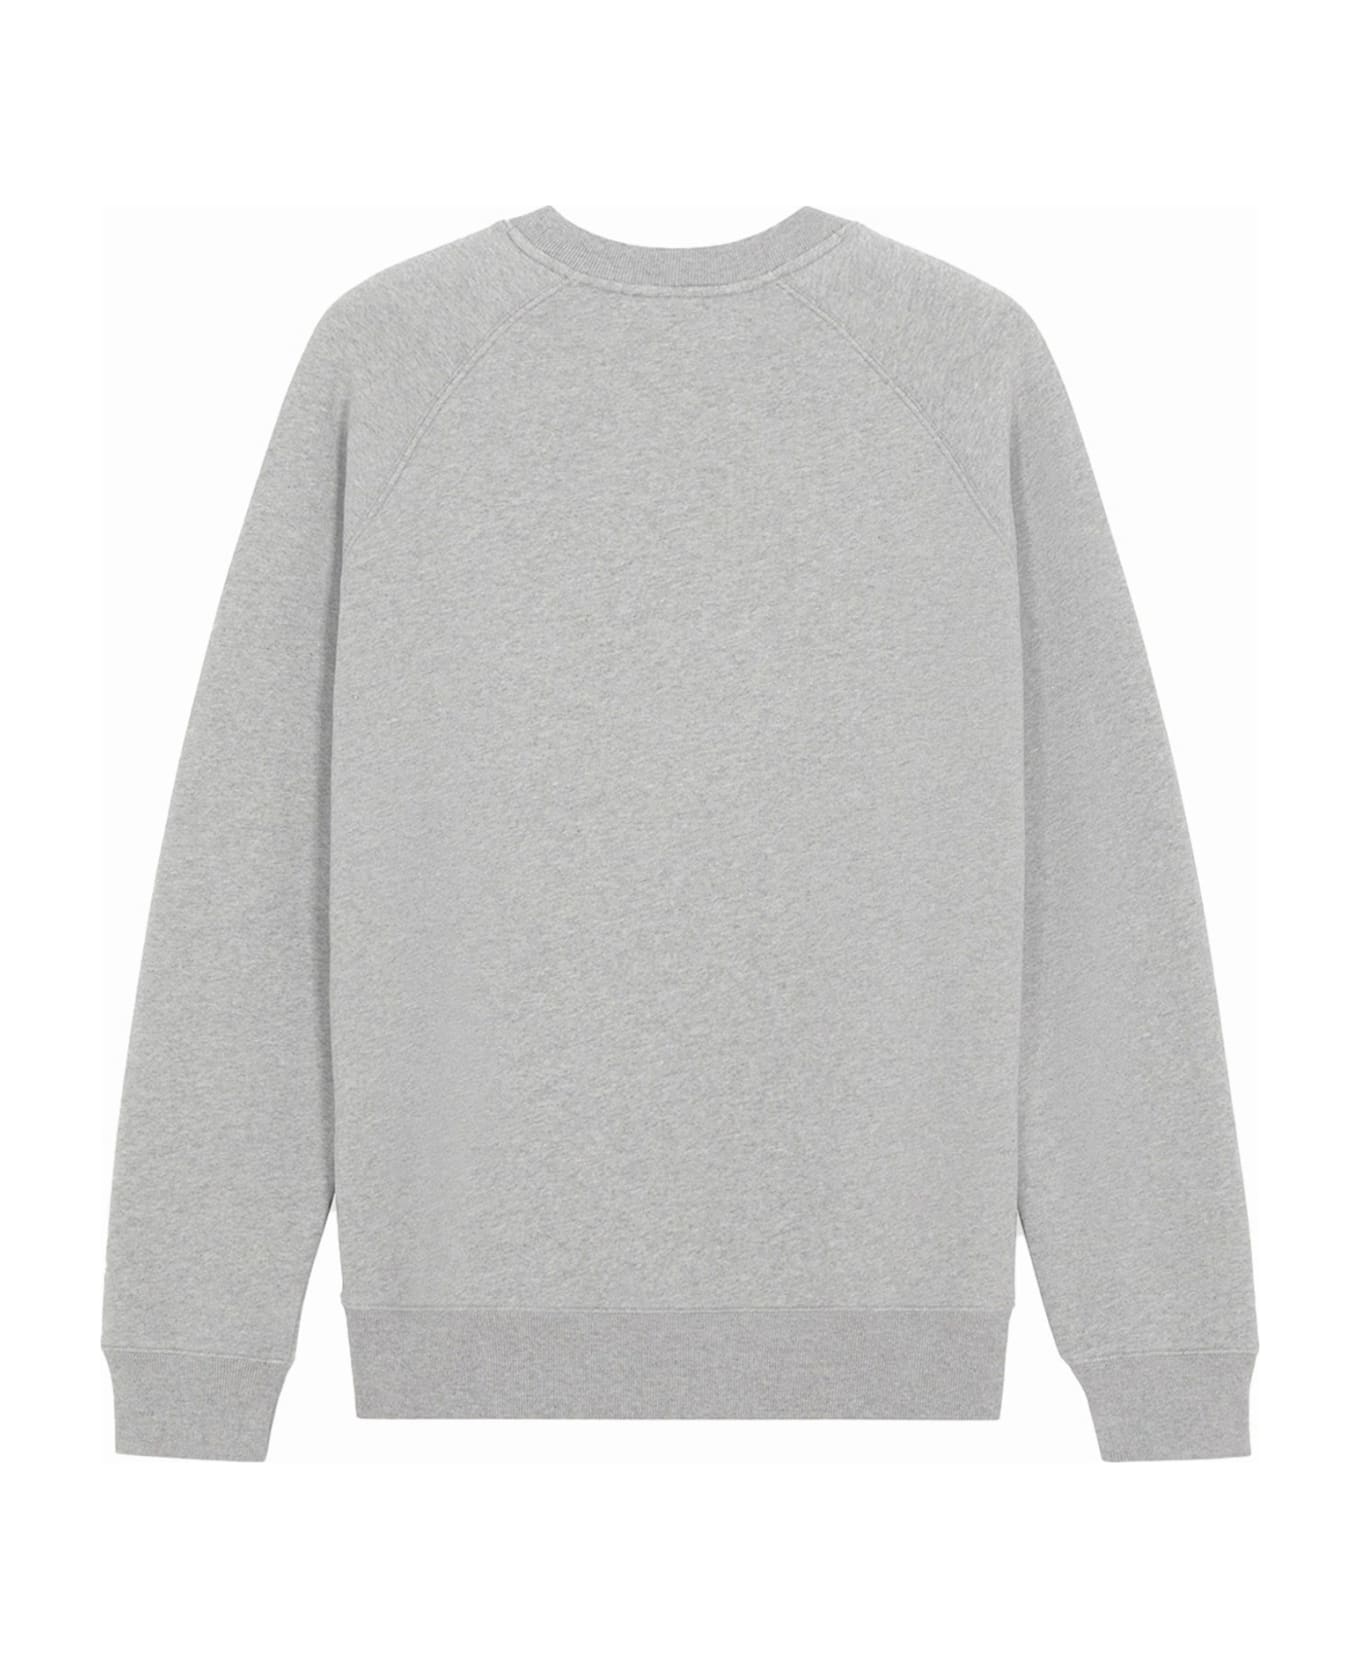 Maison Kitsuné Unisex Cotton Fleece Sweatshirt - GREY MELANGE